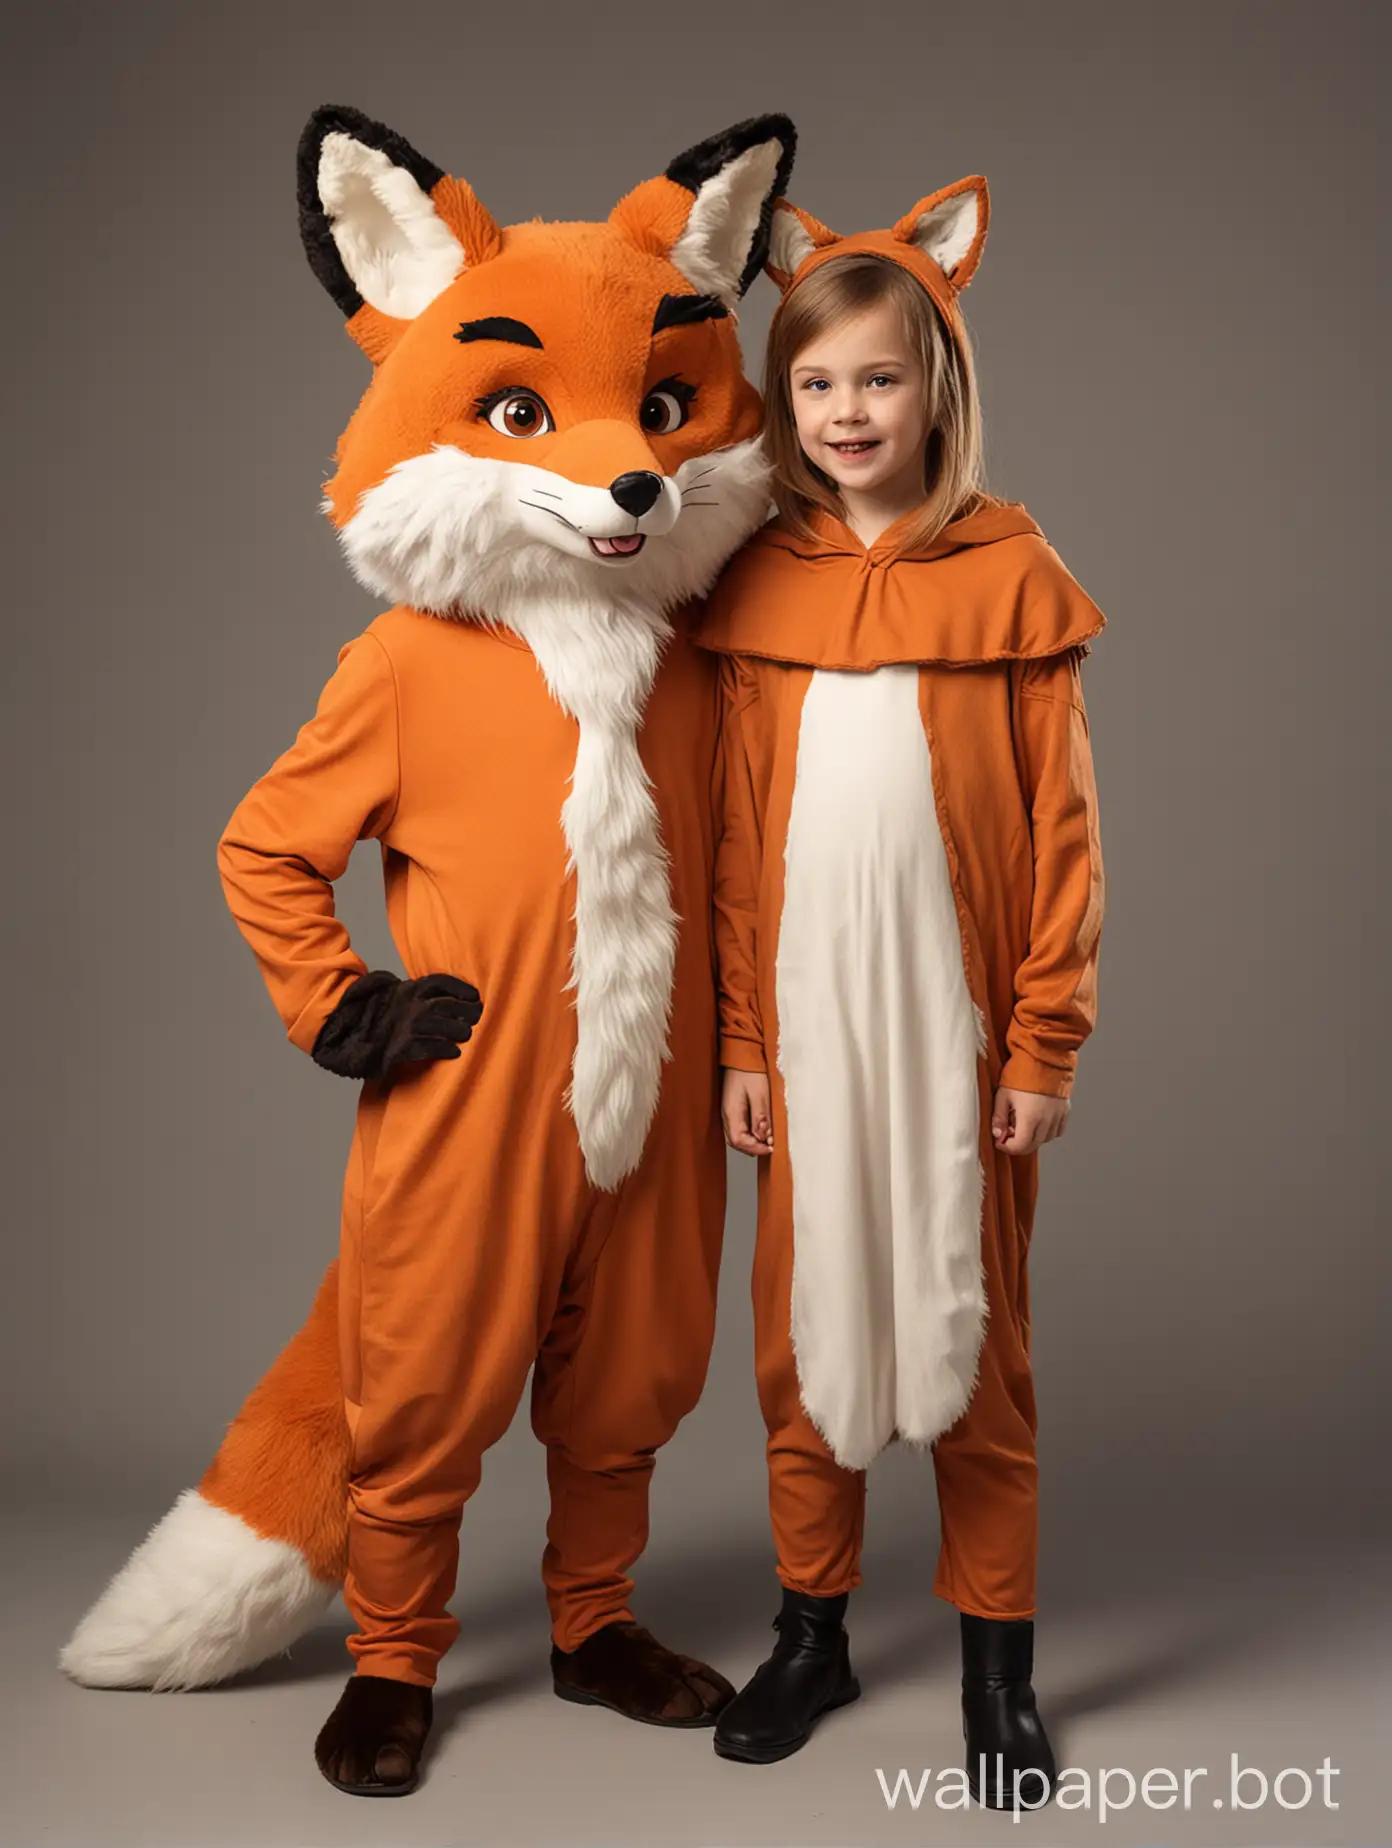 Children-Enjoying-Storytime-with-Fox-Costume-Animator